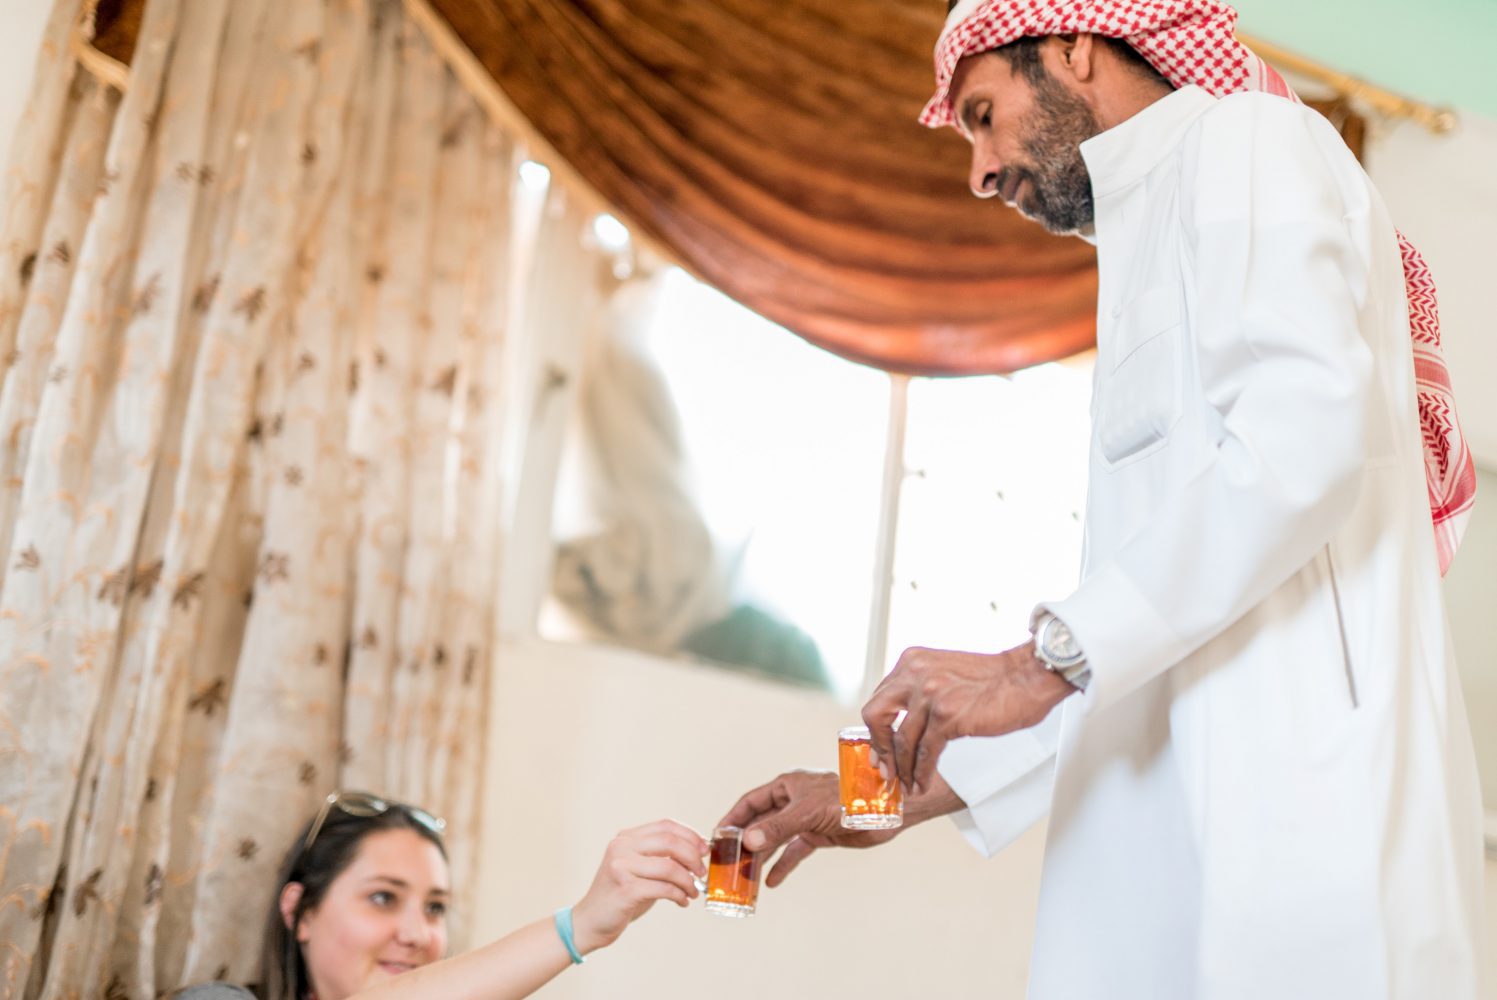 Bedouin man serving tea to a woman on a Jordan tour in Wadi Rum